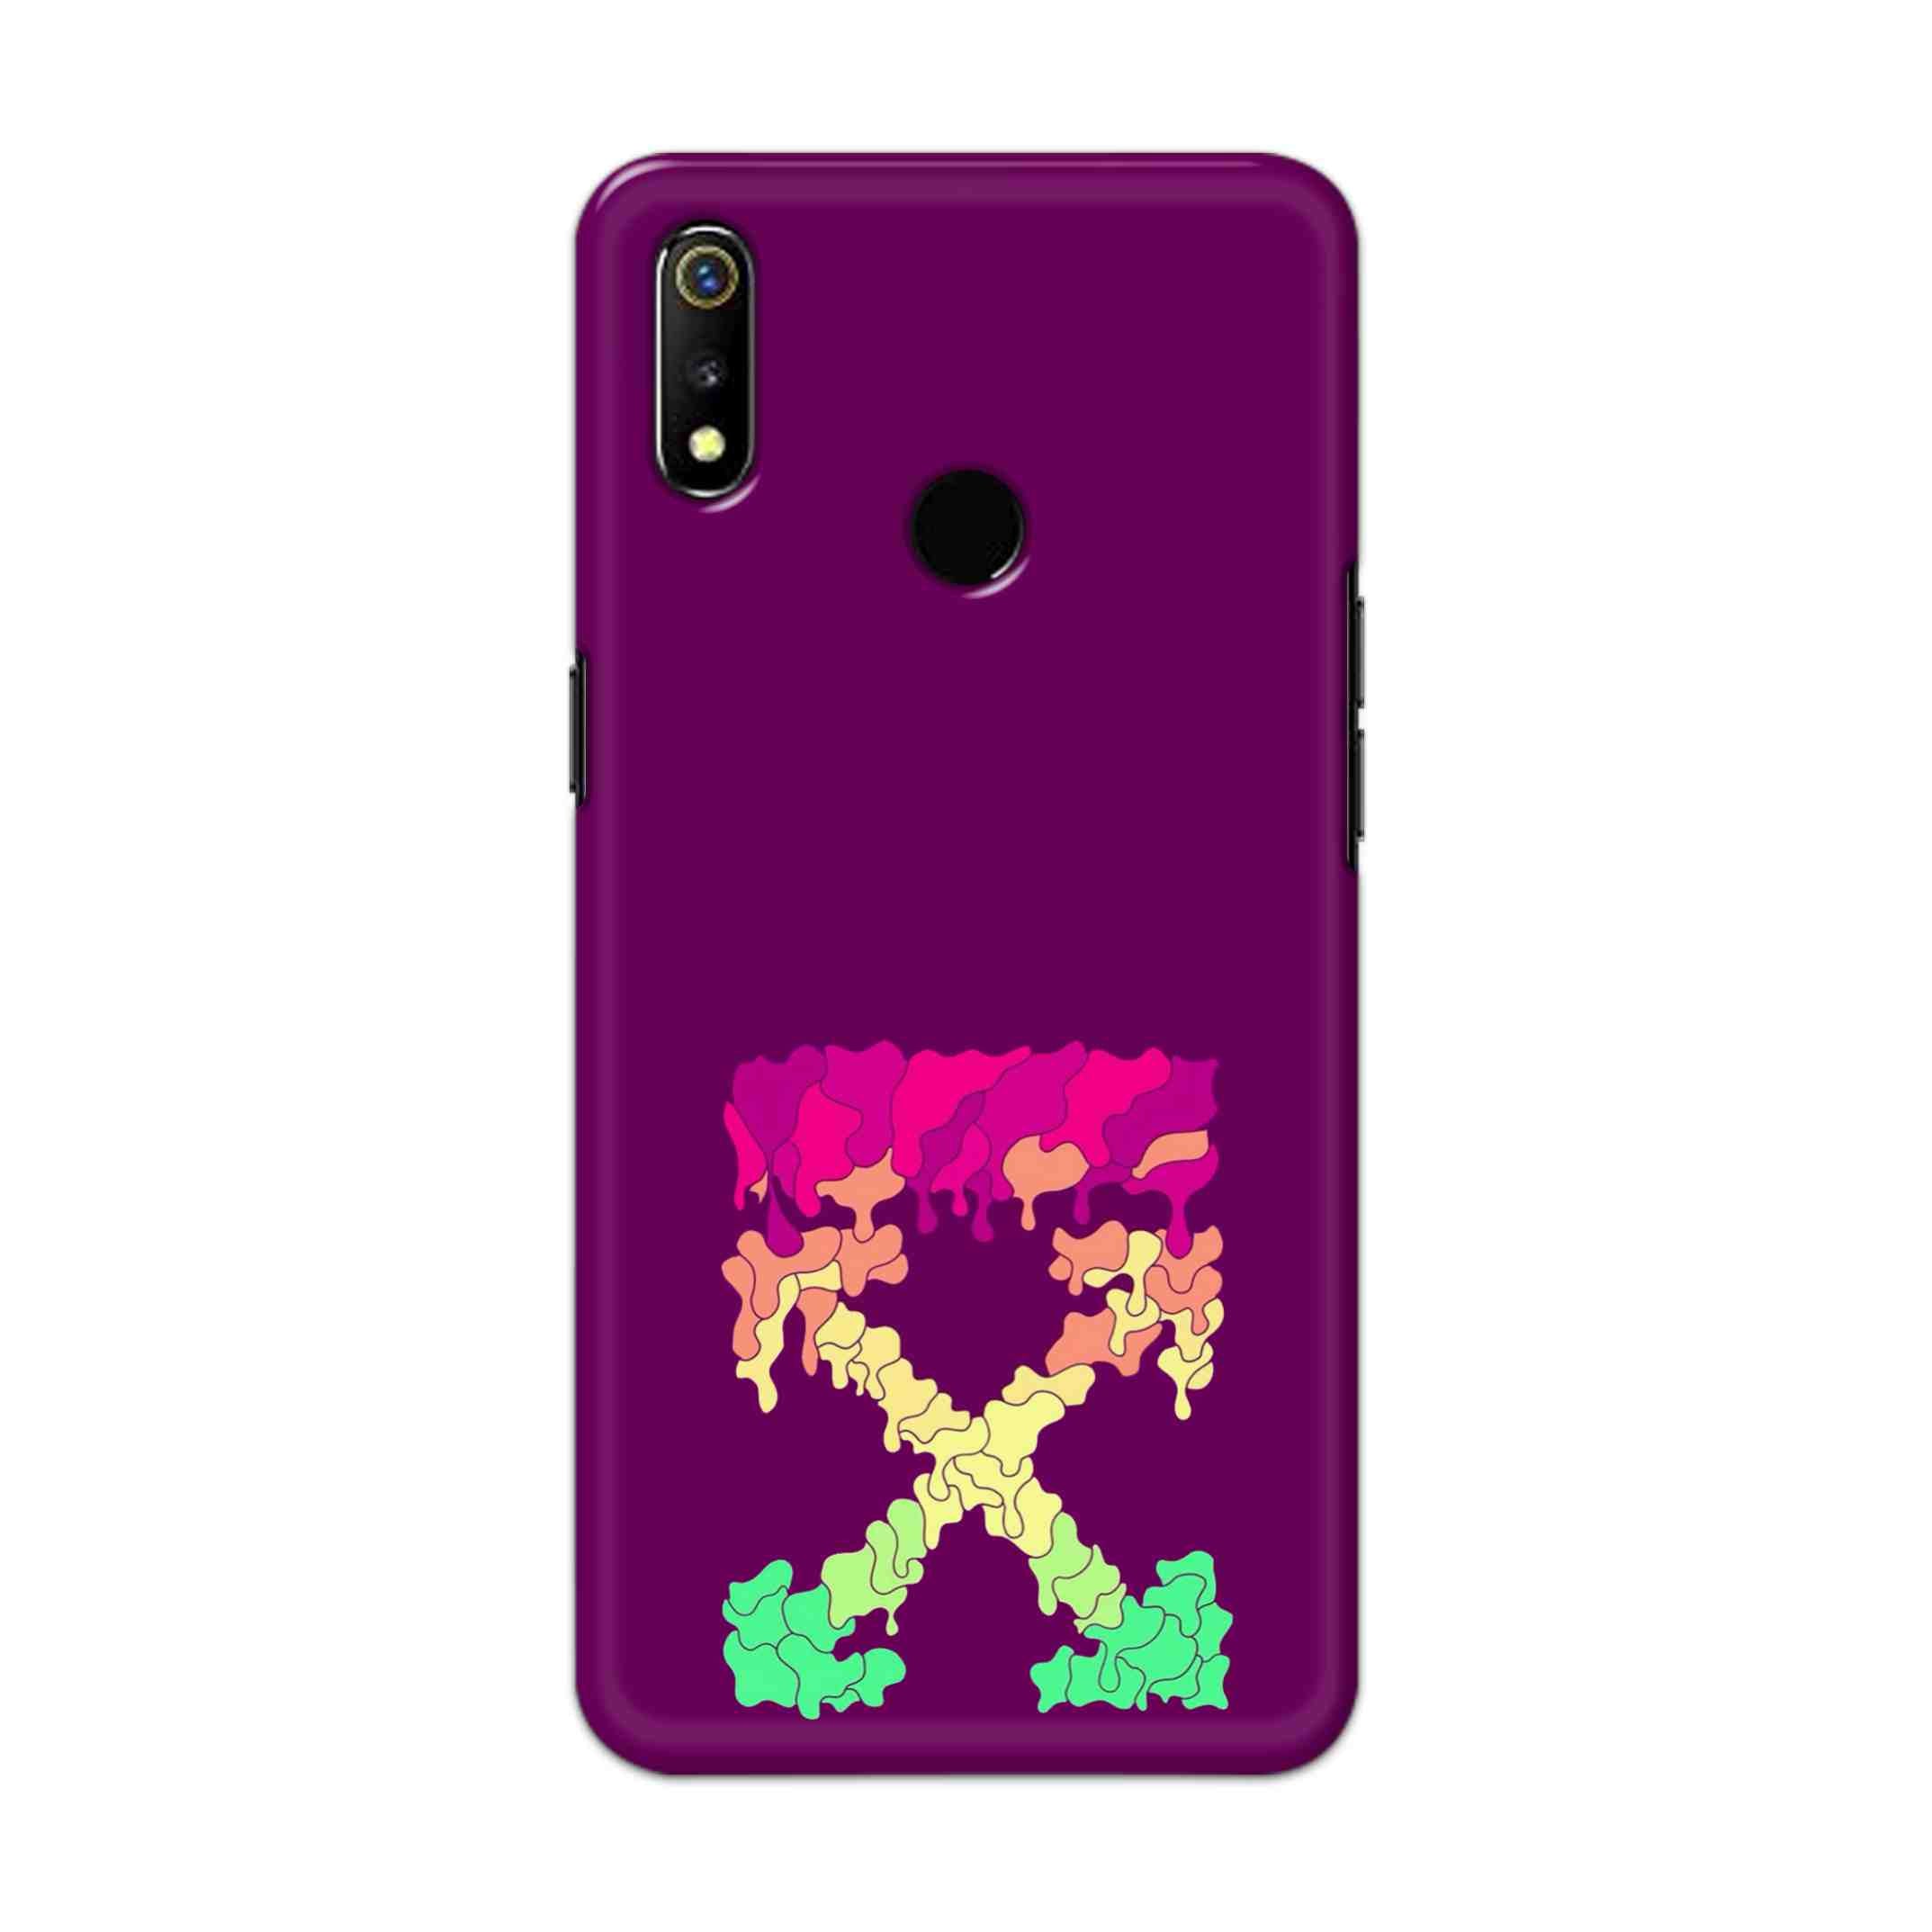 Buy X.O Hard Back Mobile Phone Case Cover For Oppo Realme 3 Online